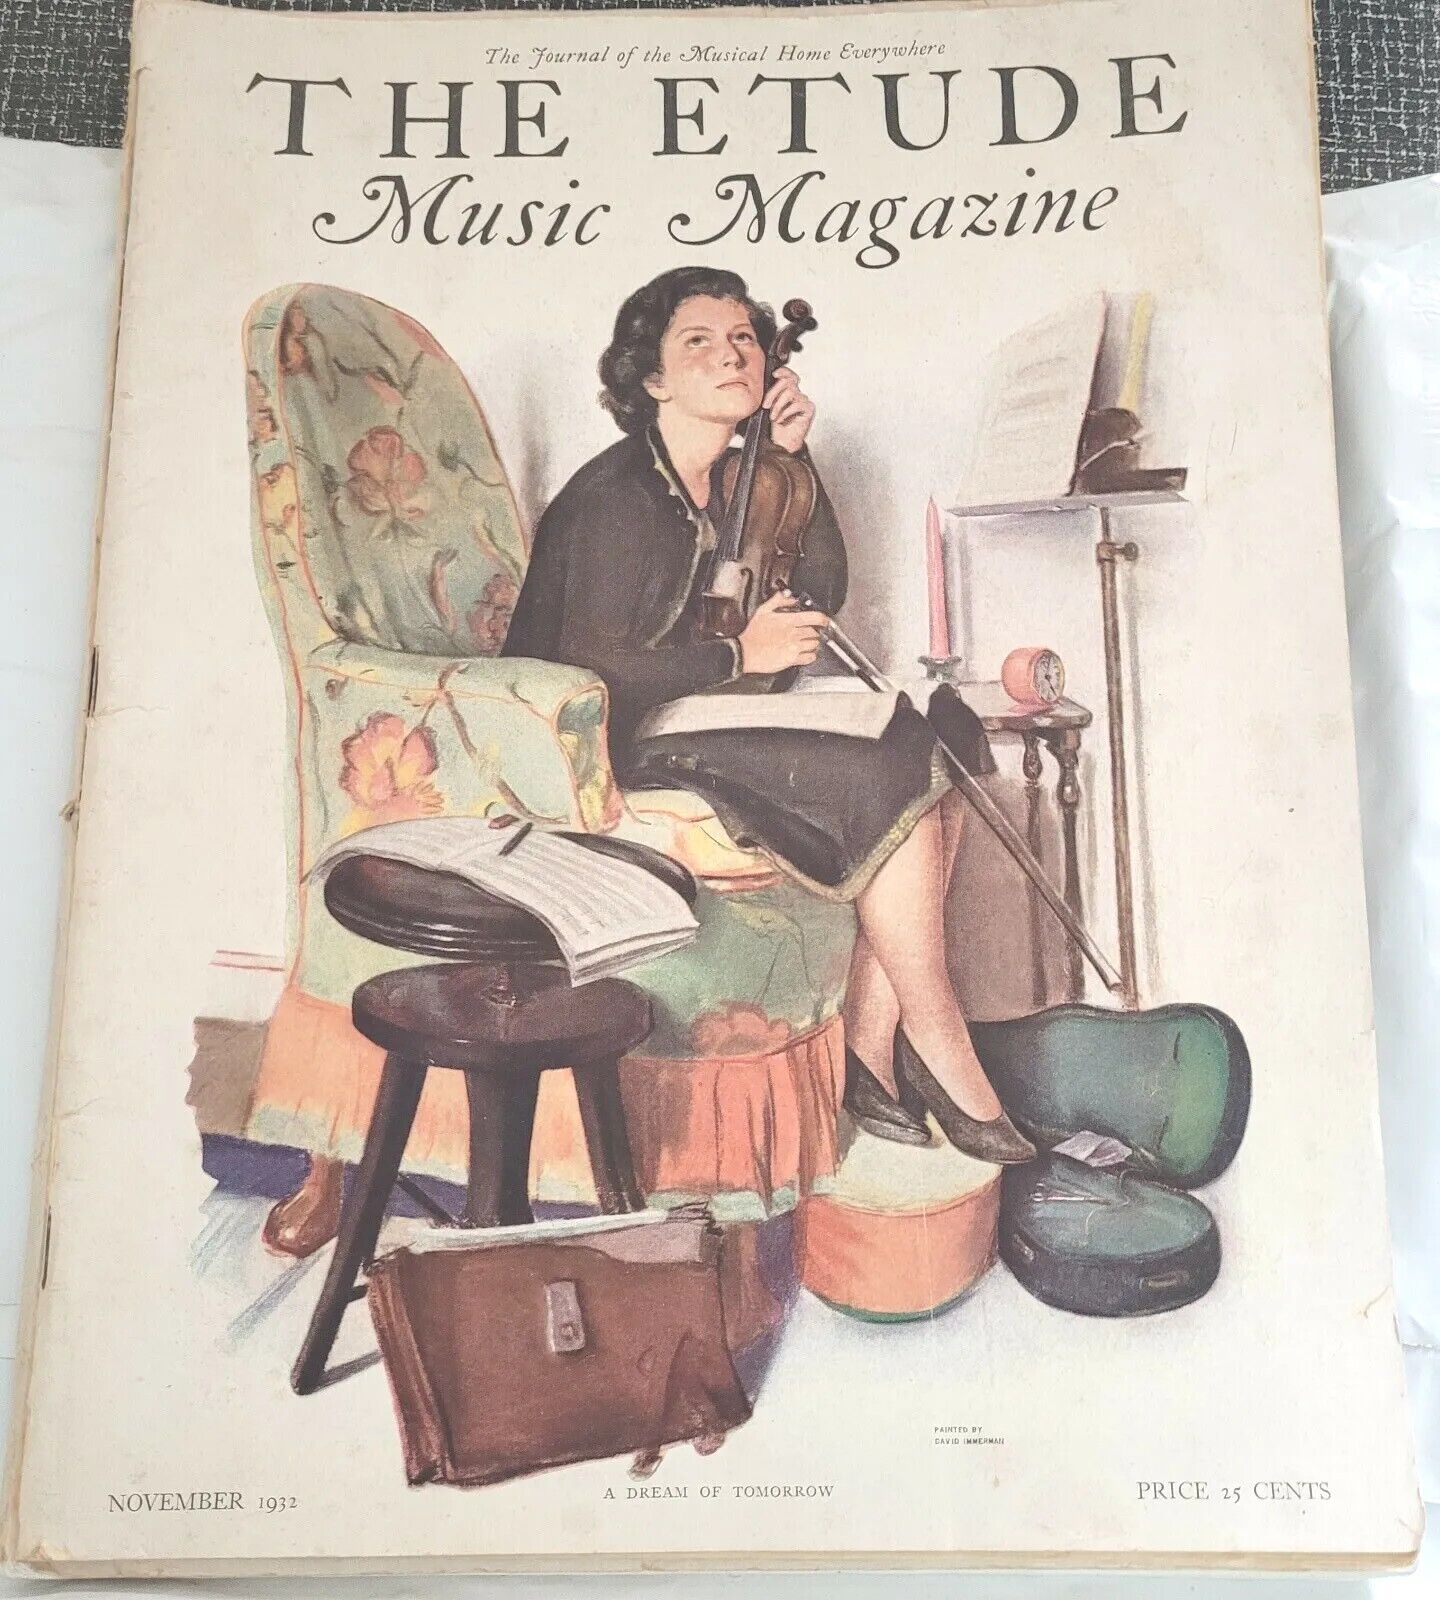 VTG Dec 1932 The Etude Music Magazine Volume L, Number 11, Junk Journals SC